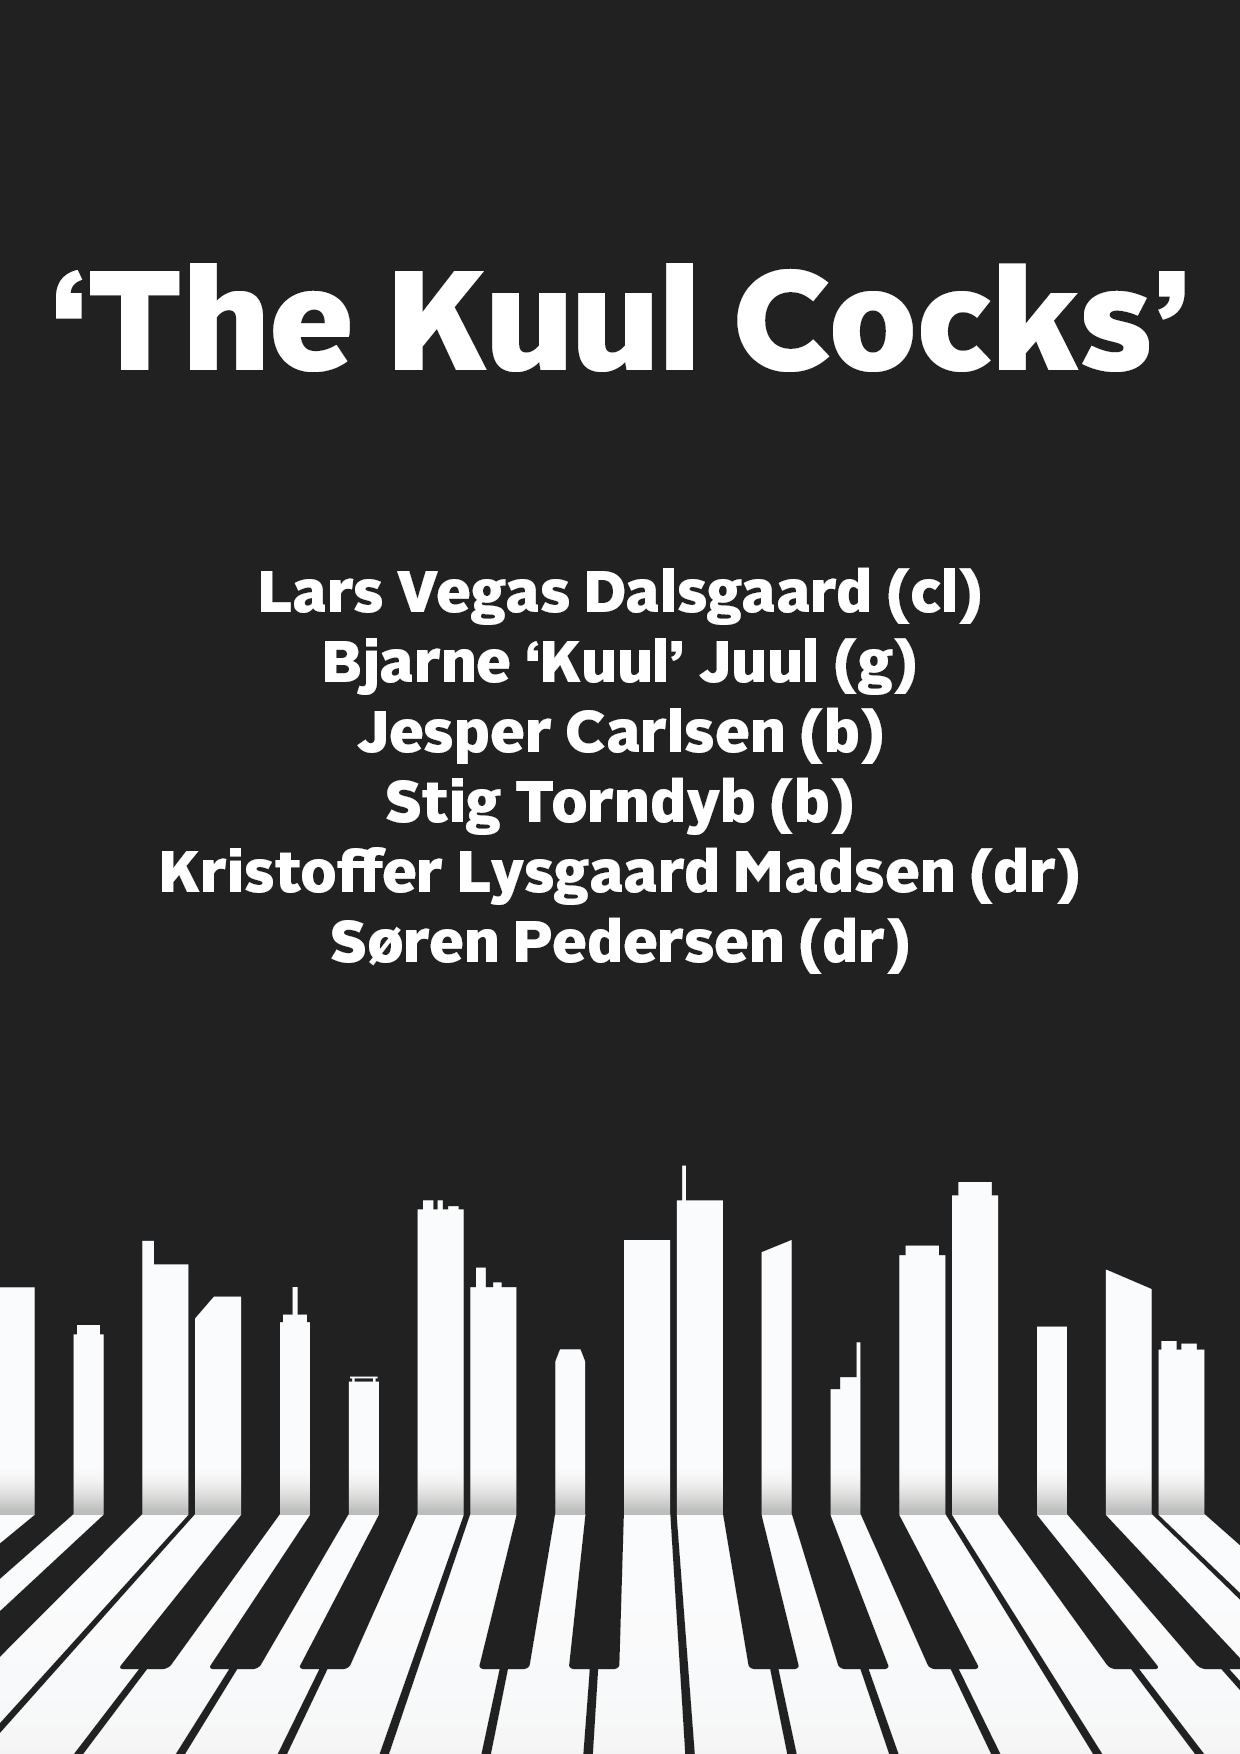 The Kuul Cocks ((DK)) - Photo: 